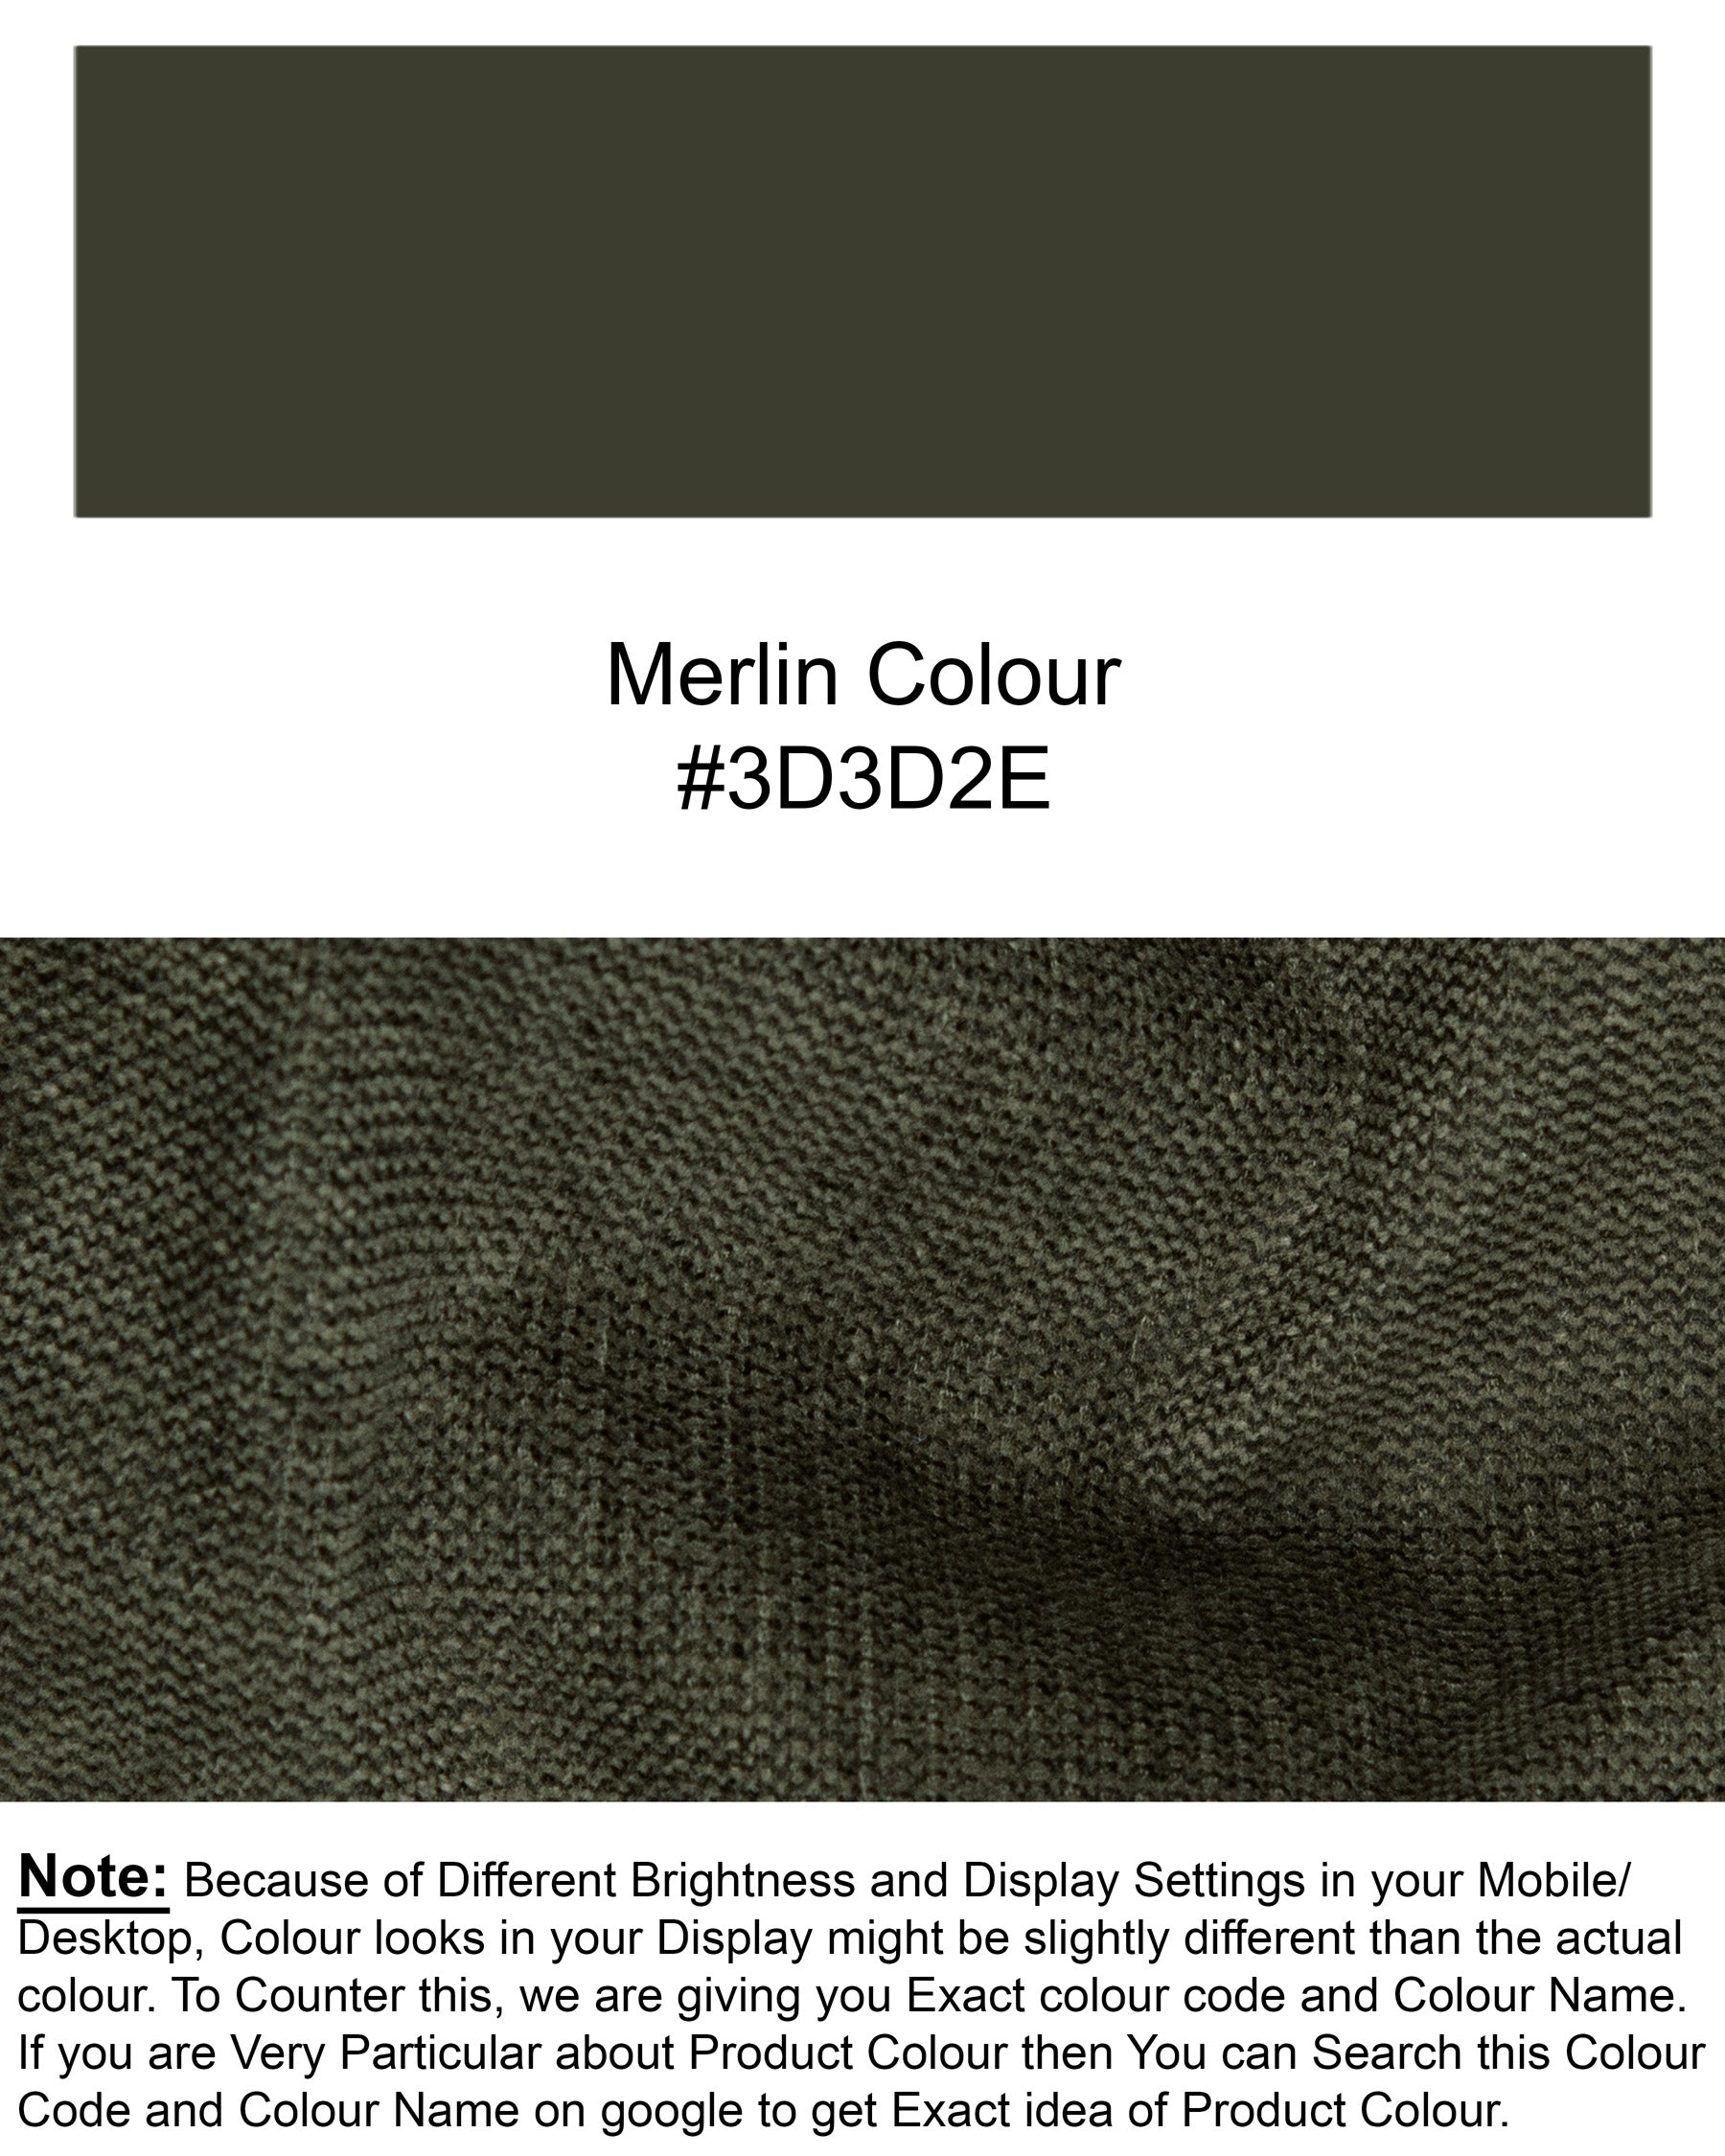 Merlin Green Cross Buttoned Bandhgala/Mandarin Corduroy Premium Cotton Suit ST1299-CBG2-36, ST1299-CBG2-38, ST1299-CBG2-40, ST1299-CBG2-42, ST1299-CBG2-44, ST1299-CBG2-46, ST1299-CBG2-48, ST1299-CBG2-50, ST1299-CBG2-52, ST1299-CBG2-54, ST1299-CBG2-56, ST1299-CBG2-58, ST1299-CBG2-60